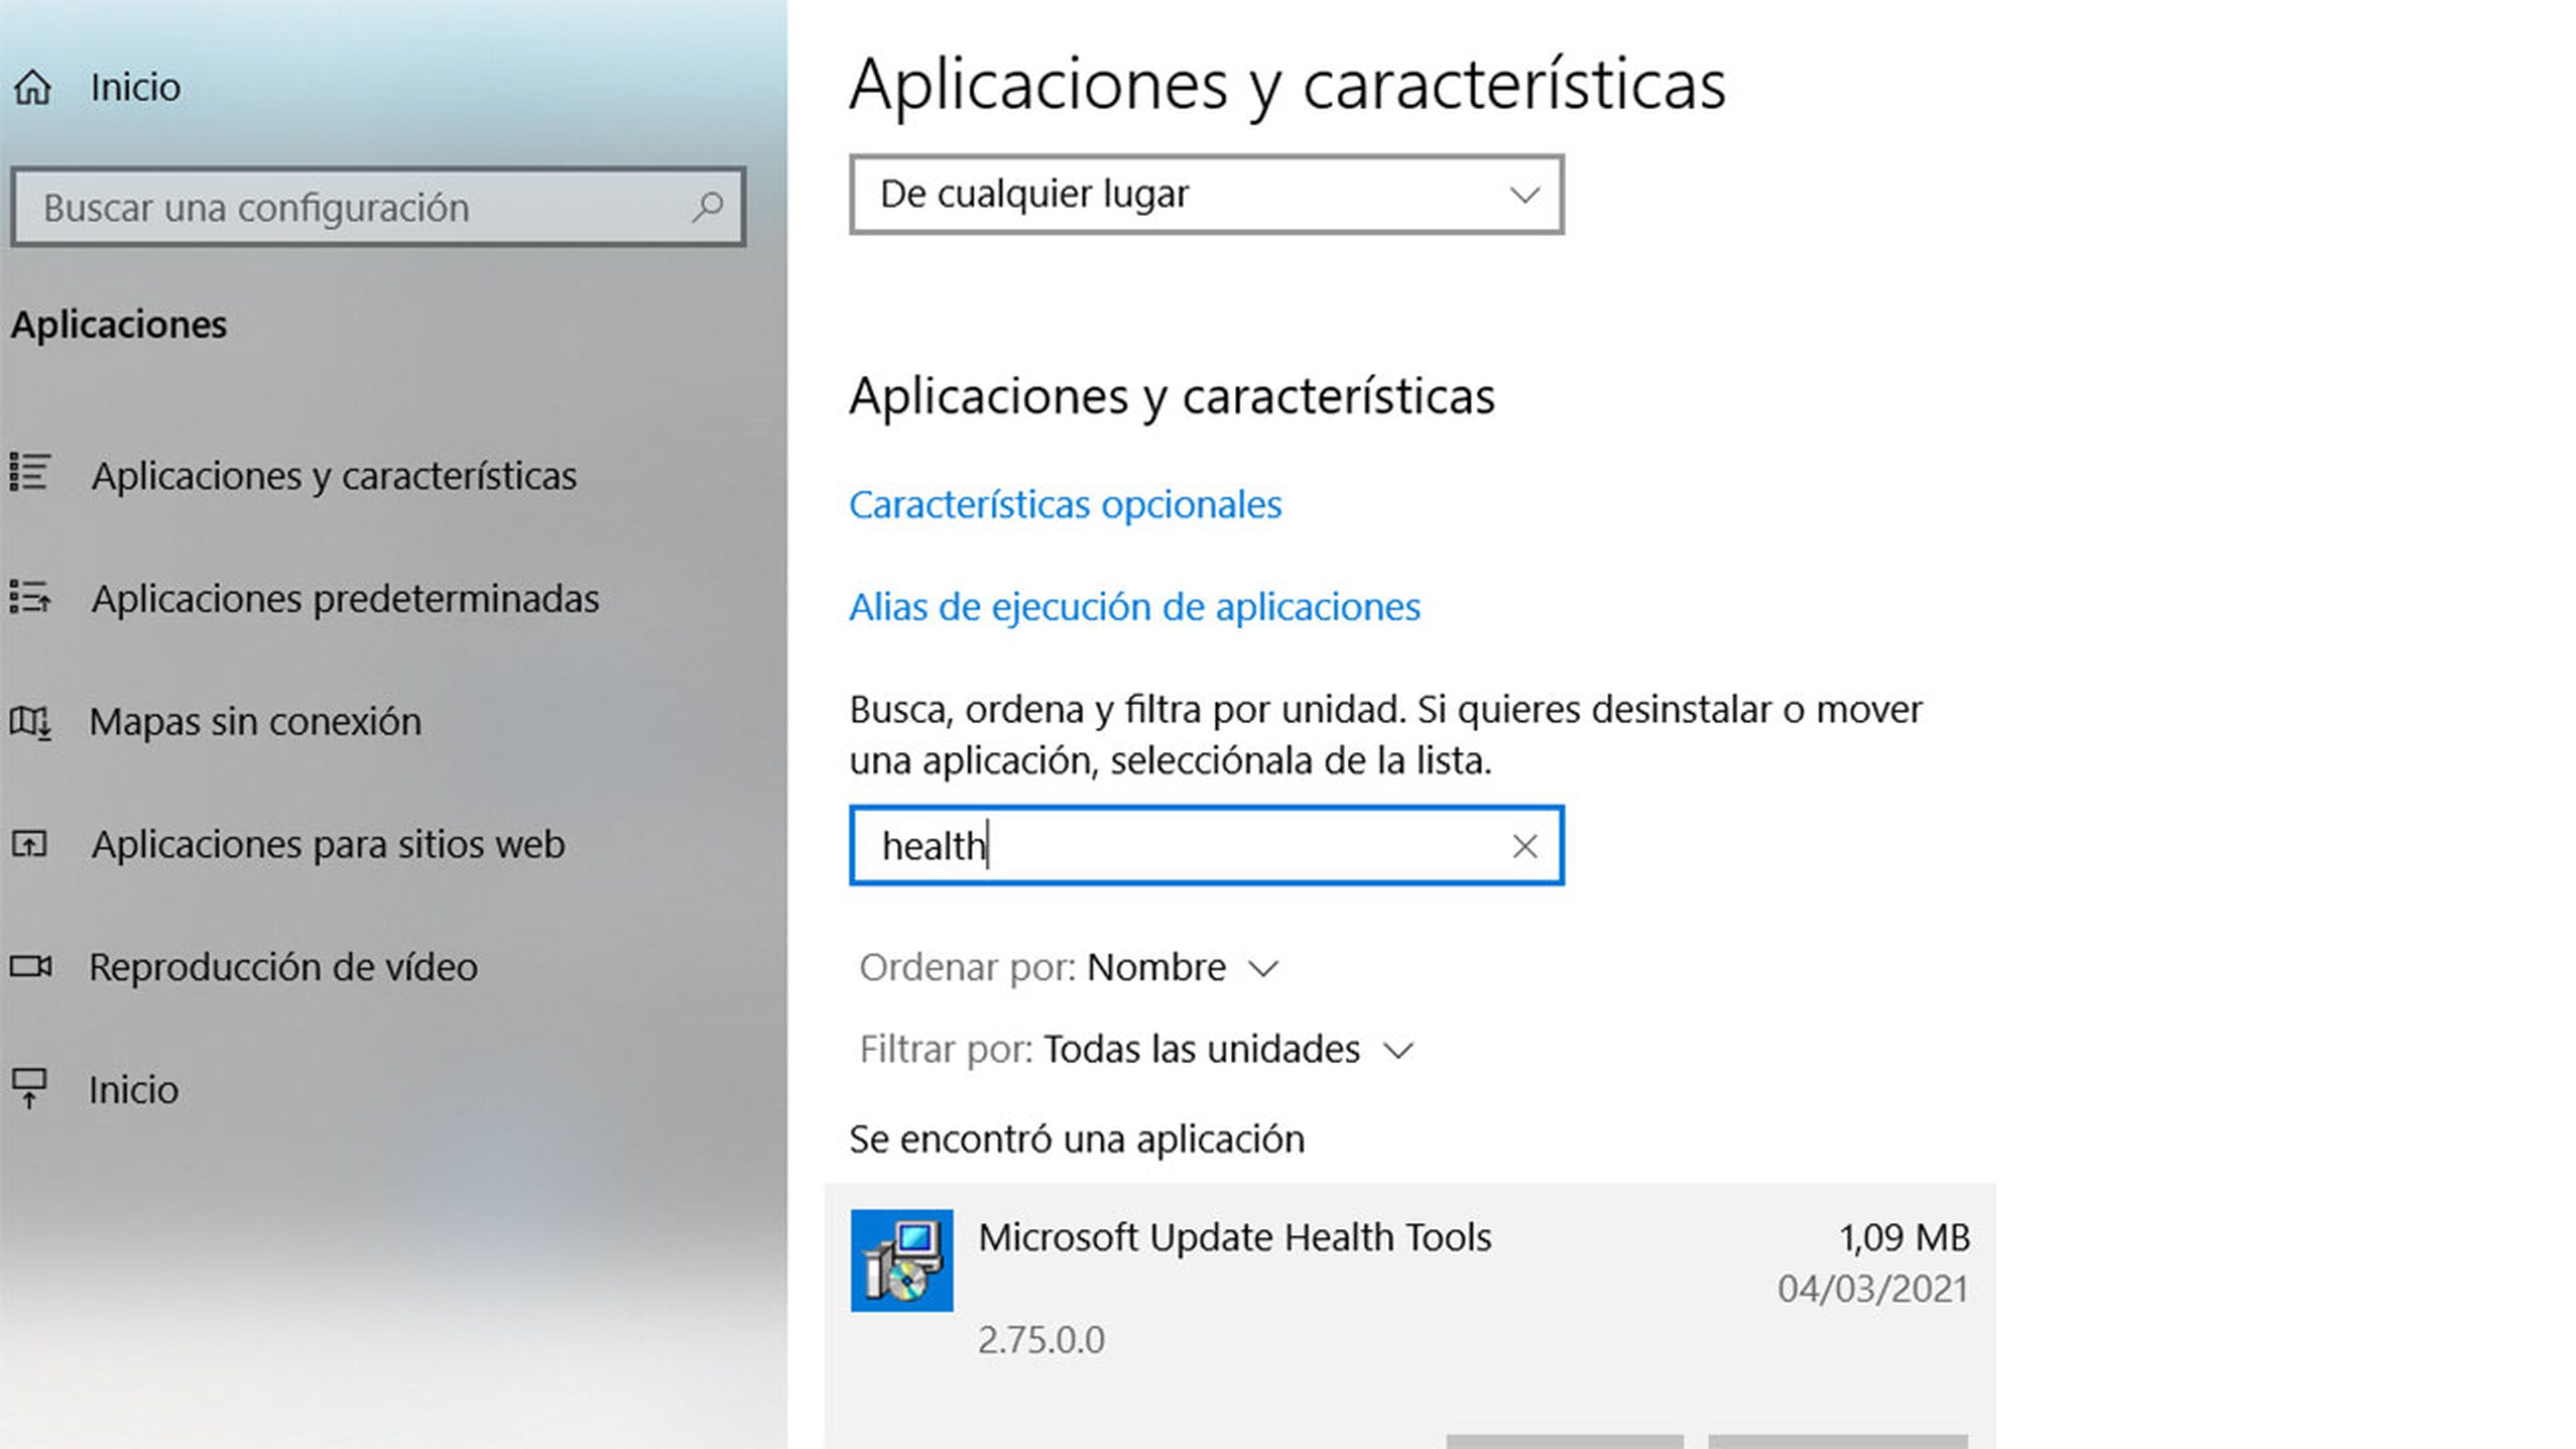 Microsoft Update Health Tools